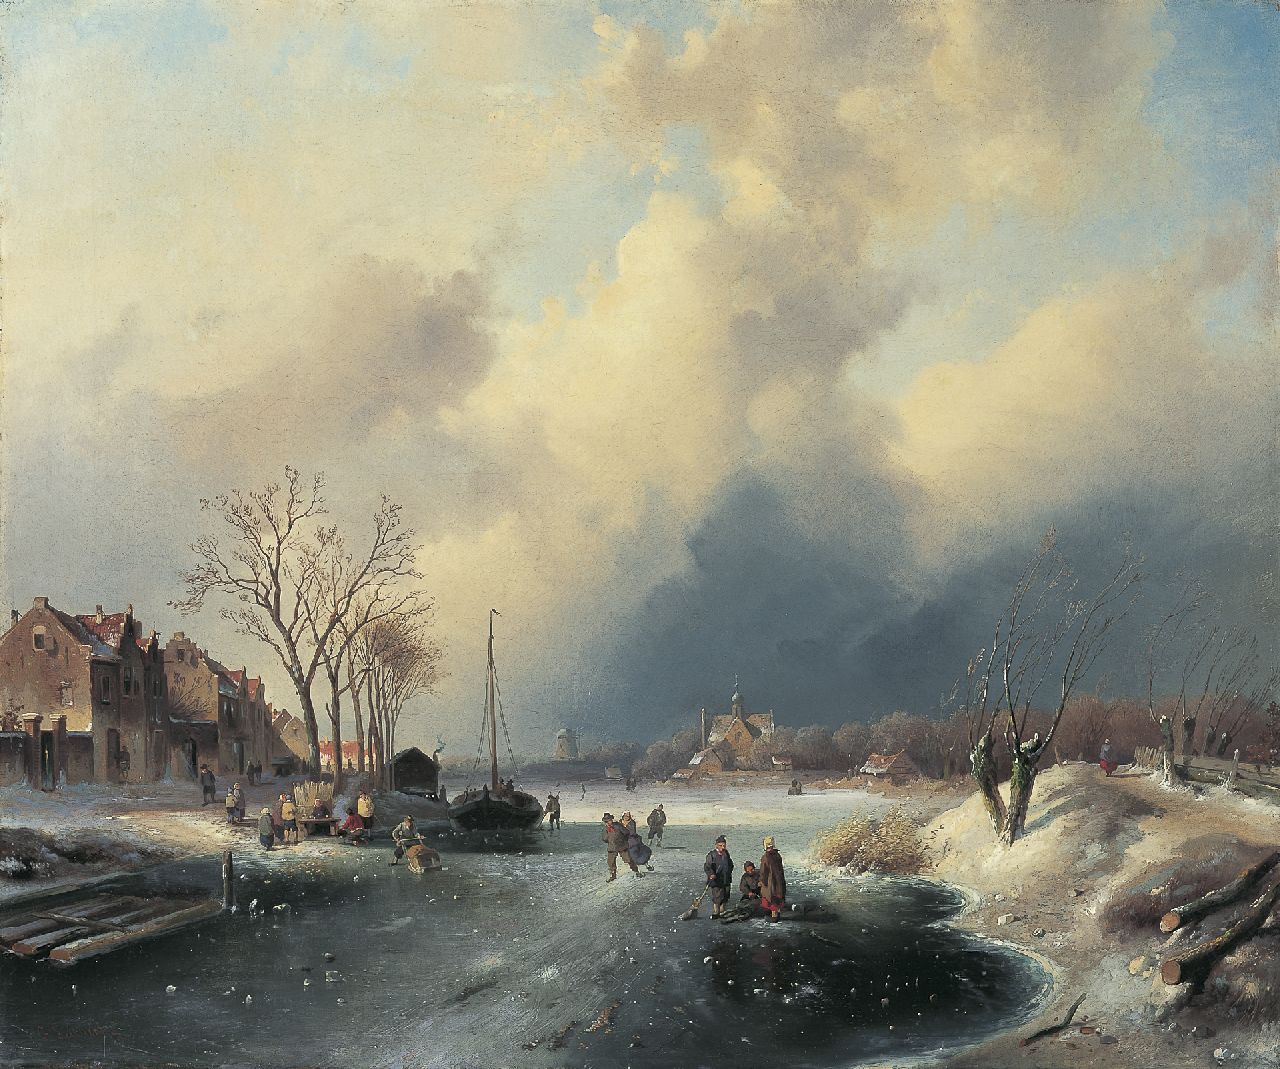 Leickert C.H.J.  | 'Charles' Henri Joseph Leickert, Figures conversing on the ice, oil on canvas 59.7 x 71.4 cm, signed l.l.